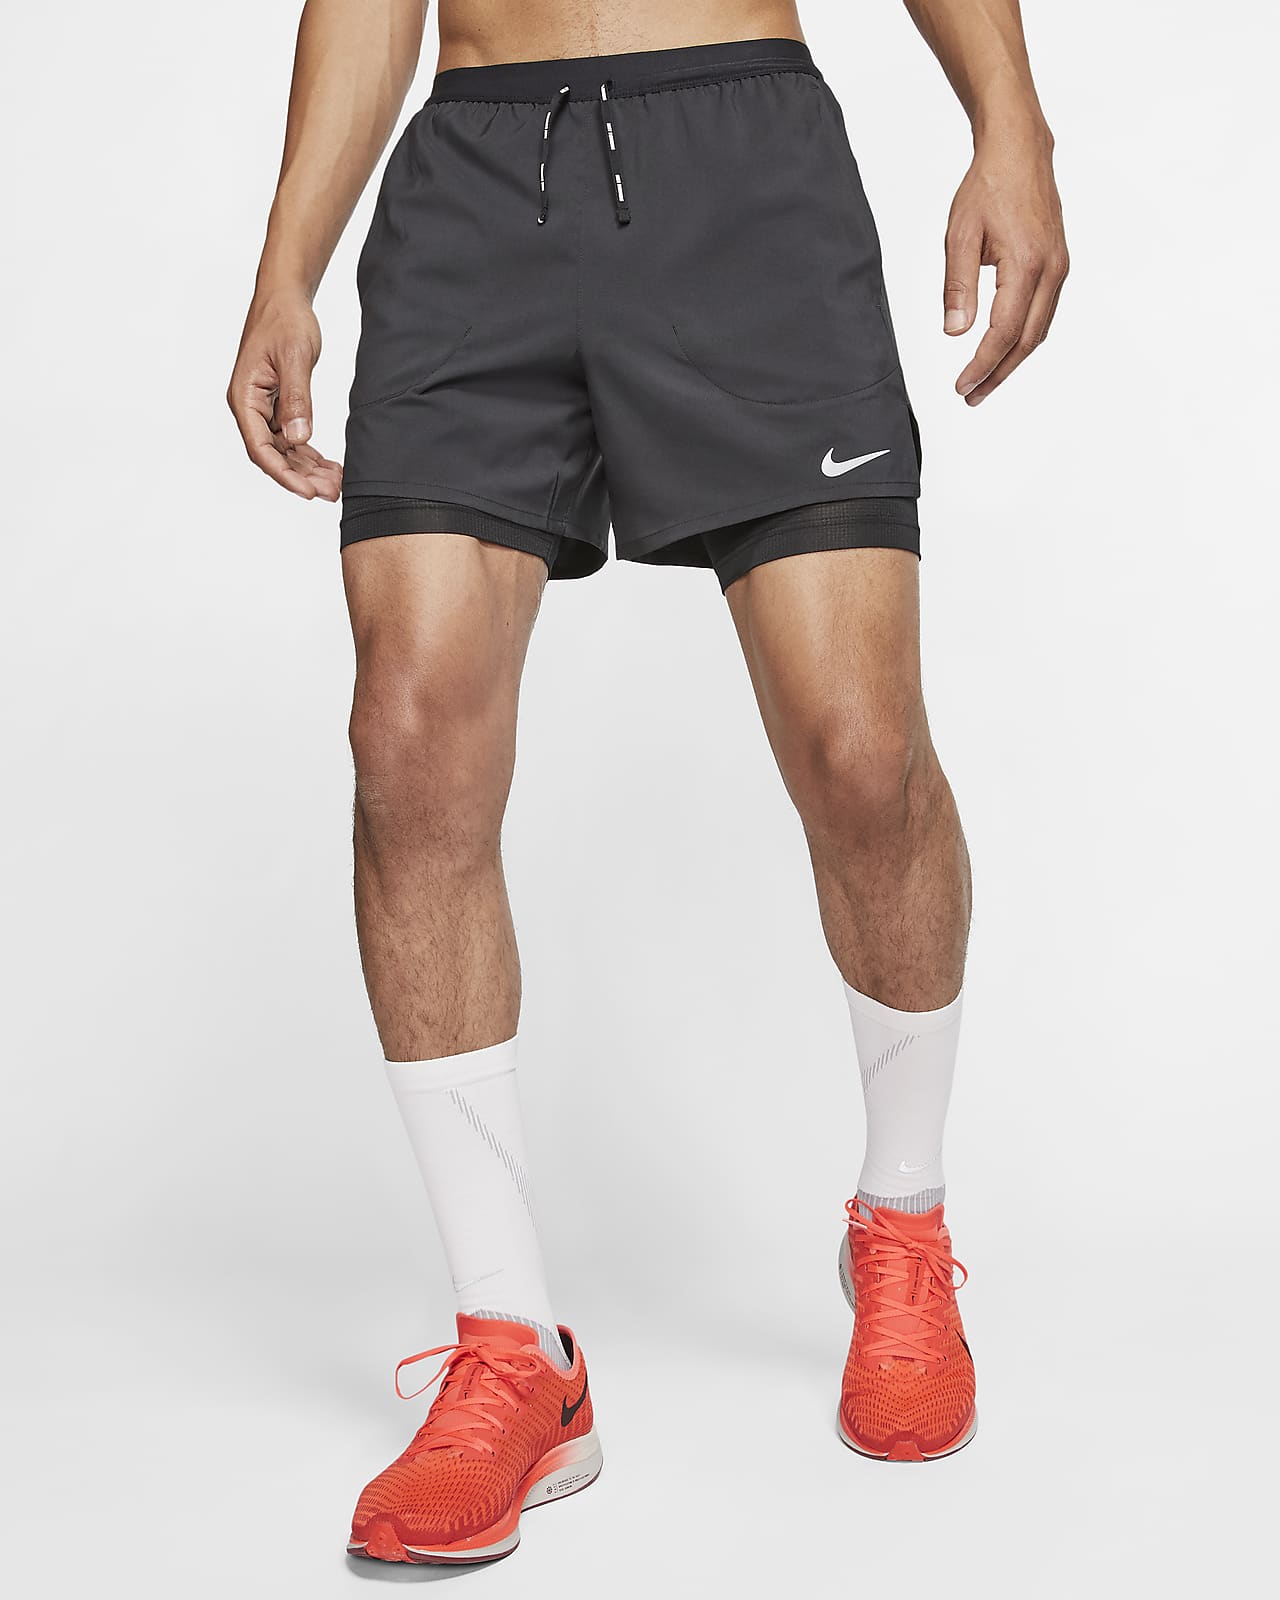 Eerbetoon ondergronds Centimeter Nike Flex Stride Men's 13cm (approx.) 2-in-1 Running Shorts. Nike CZ